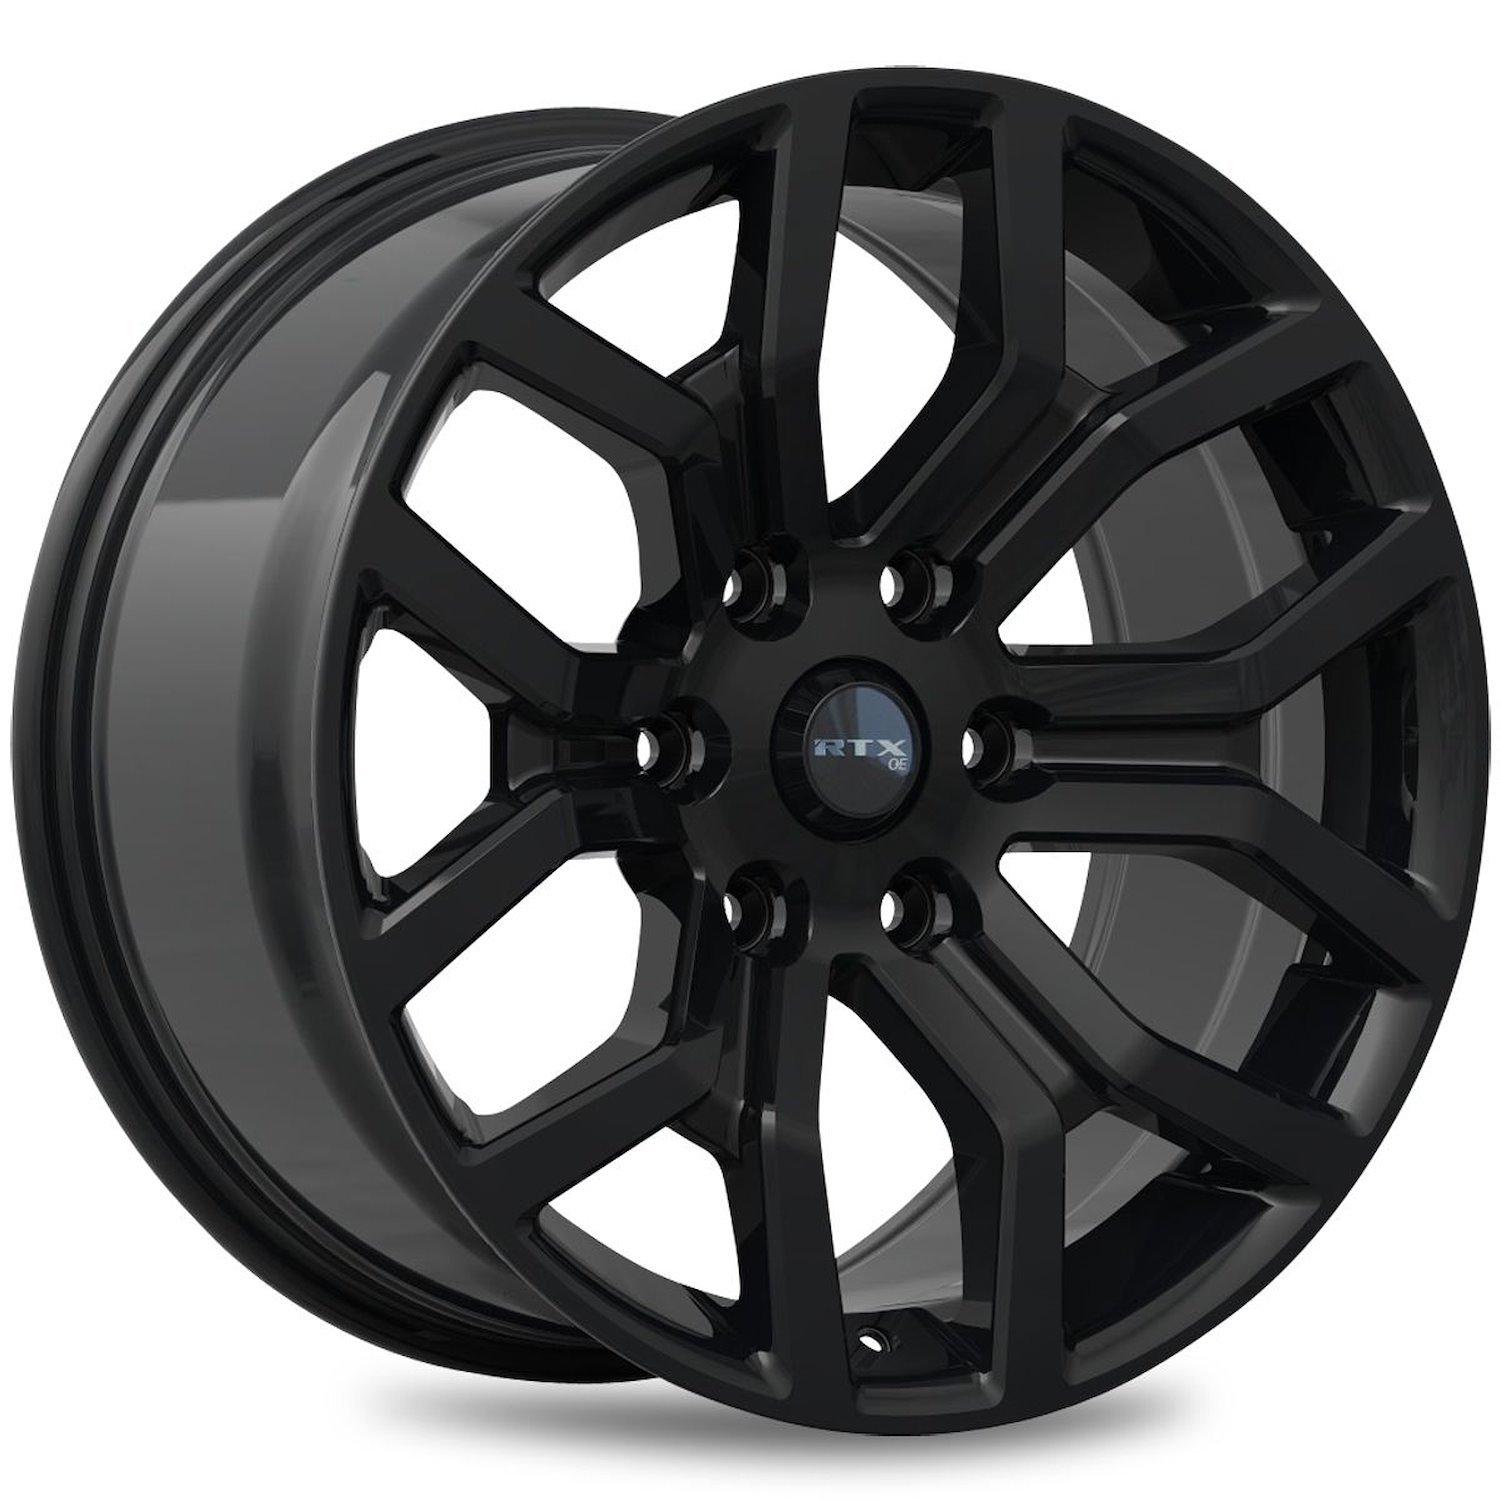 083207 OE-Series FD-01 Wheel [Size: 17" x 8.50"] Gloss Black Finish